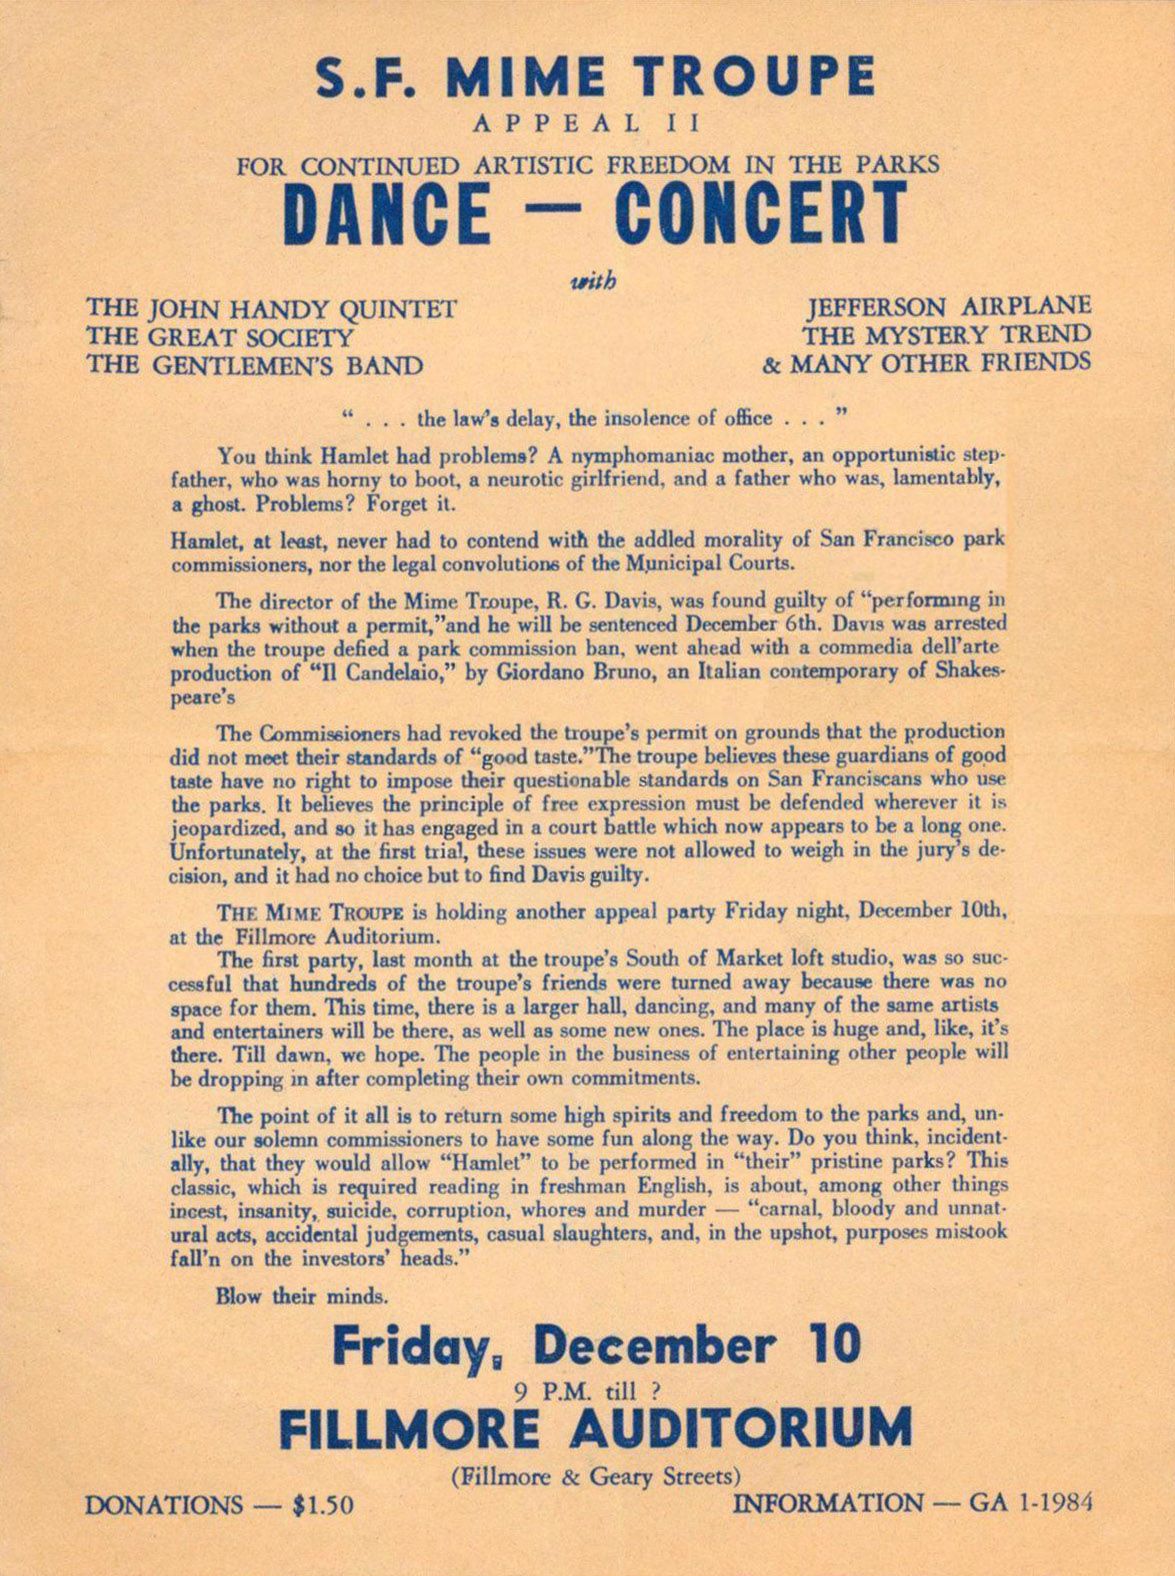 AOR-2.36-OHB-A Concert Poster